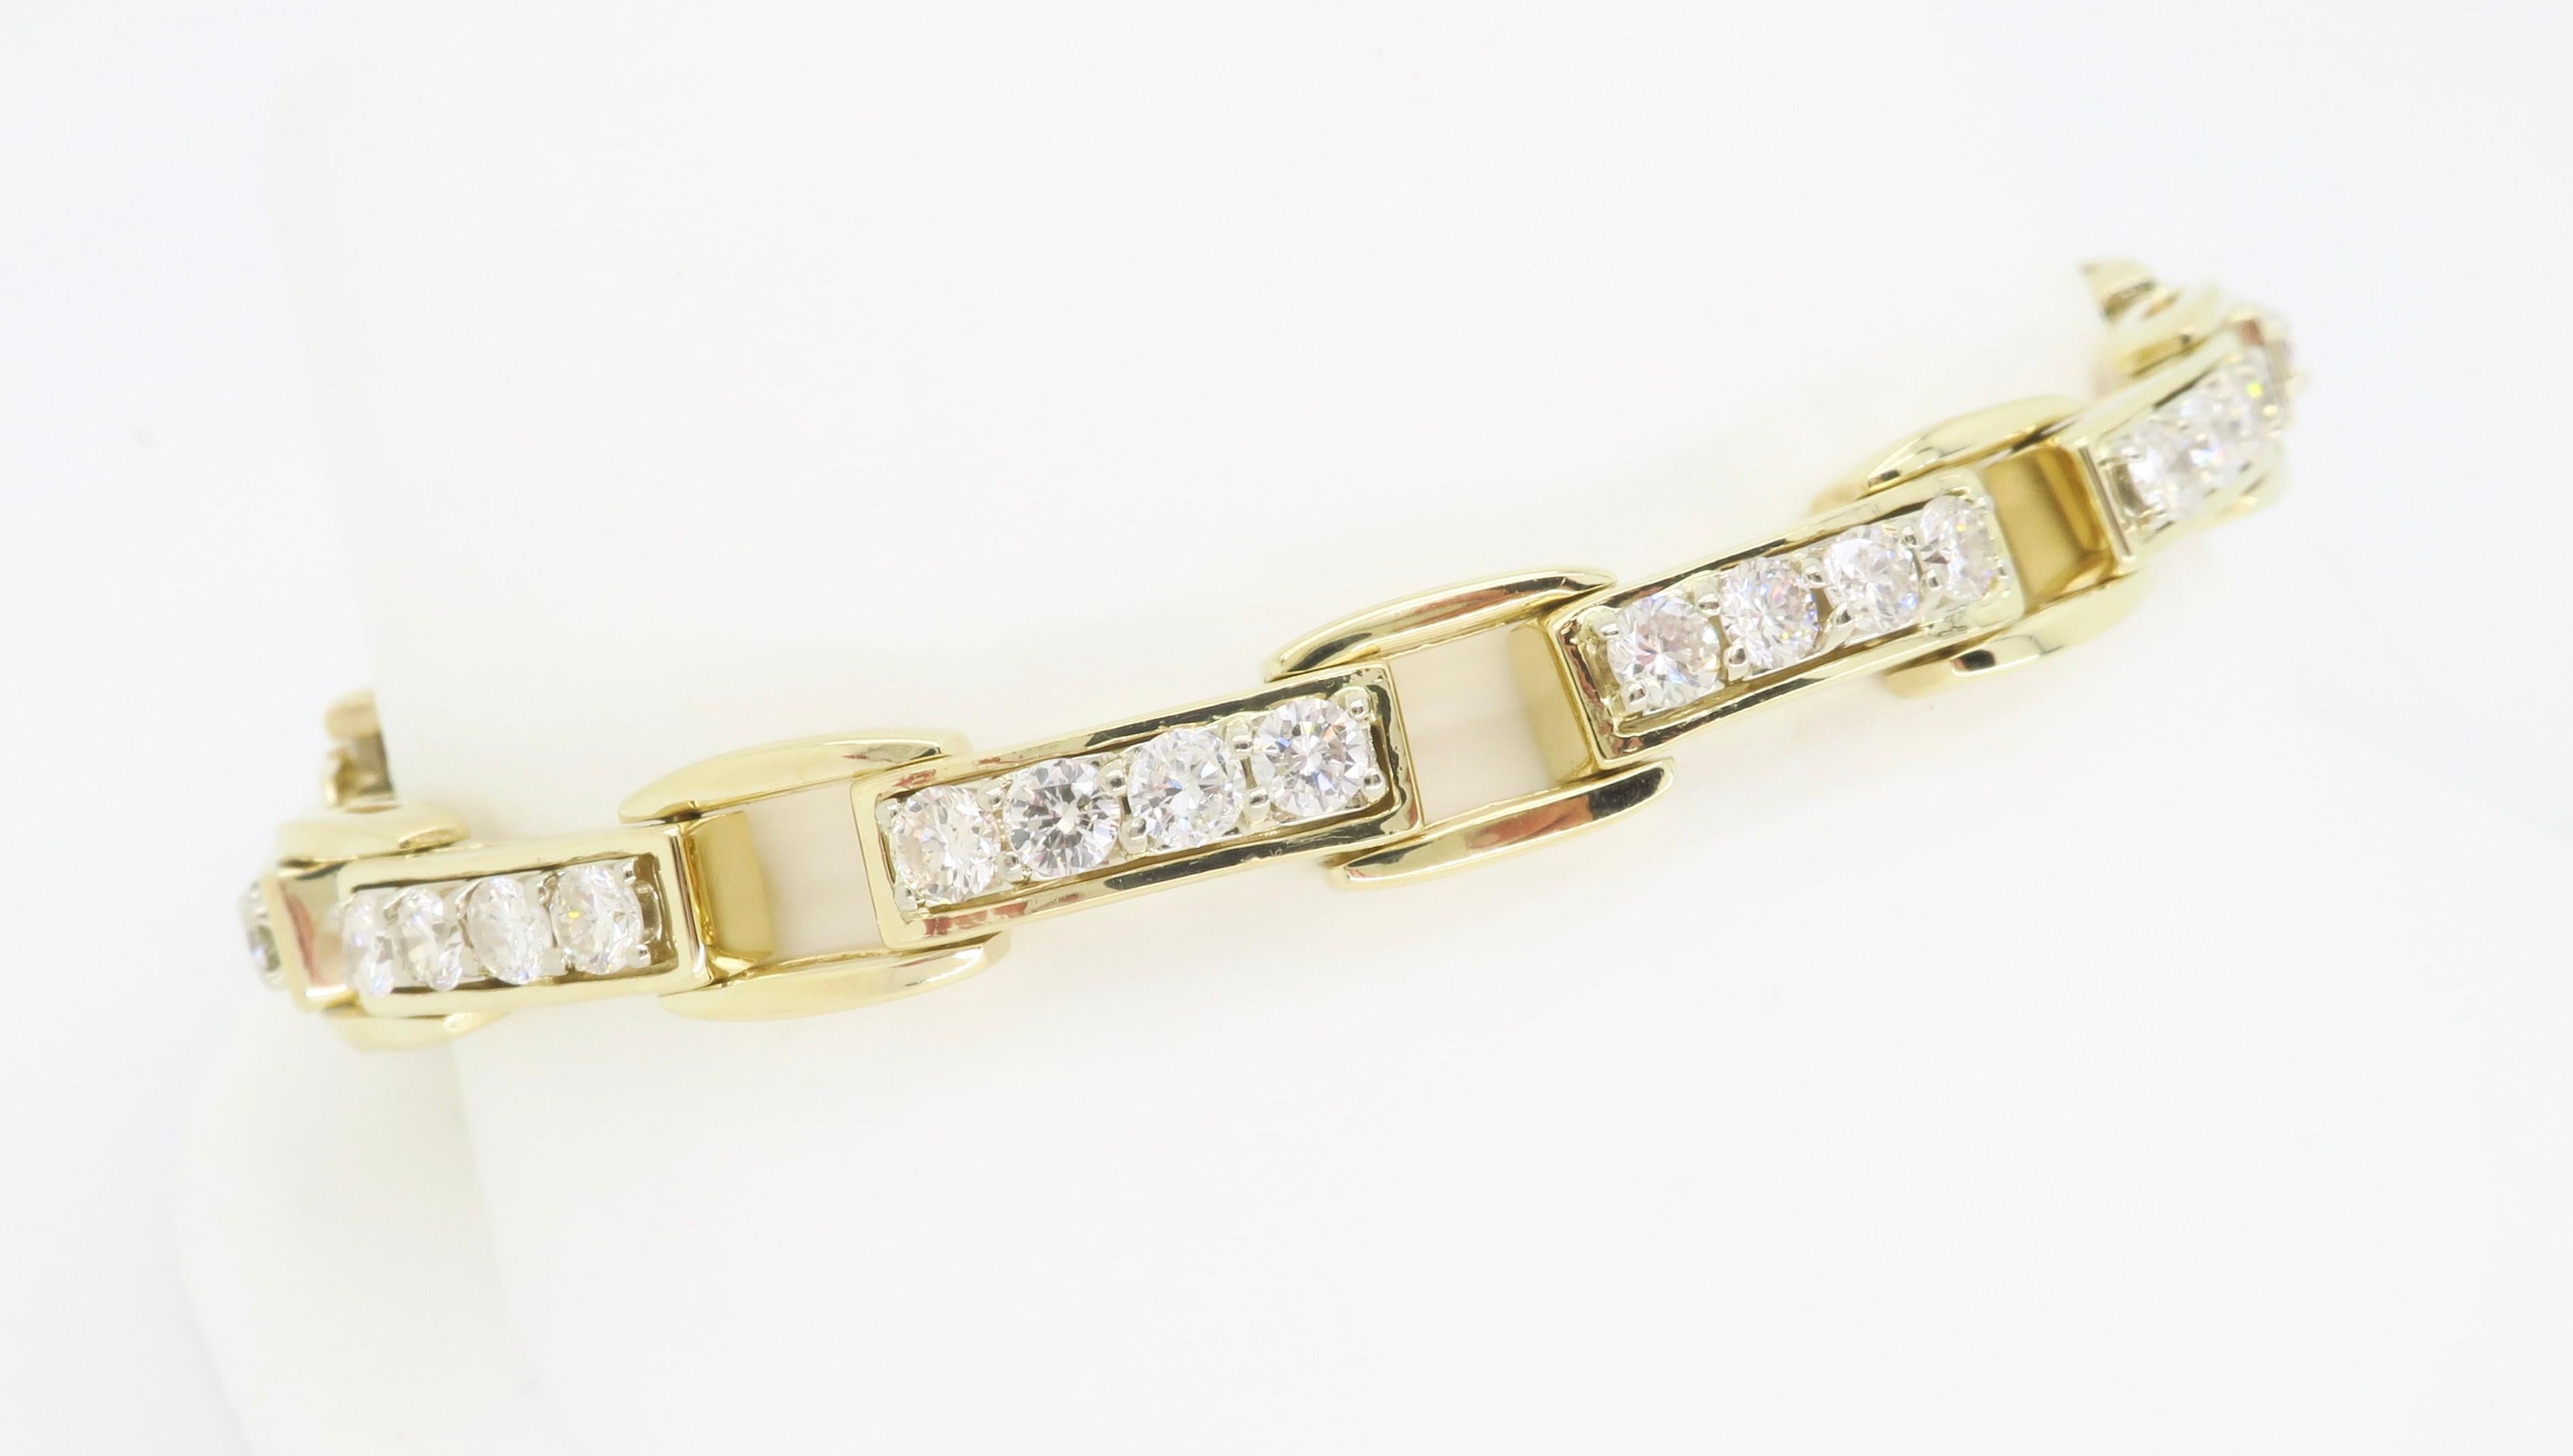 14K yellow gold diamond link bracelet featuring four Round Brilliant cut diamond set into each link. 

Diamond Carat Weight: Approximately 3.02CTW
Diamond Cut: Round Brilliant Cut
Color: Average G-J
Clarity: Average SI1-I1
Metal: 14K Yellow